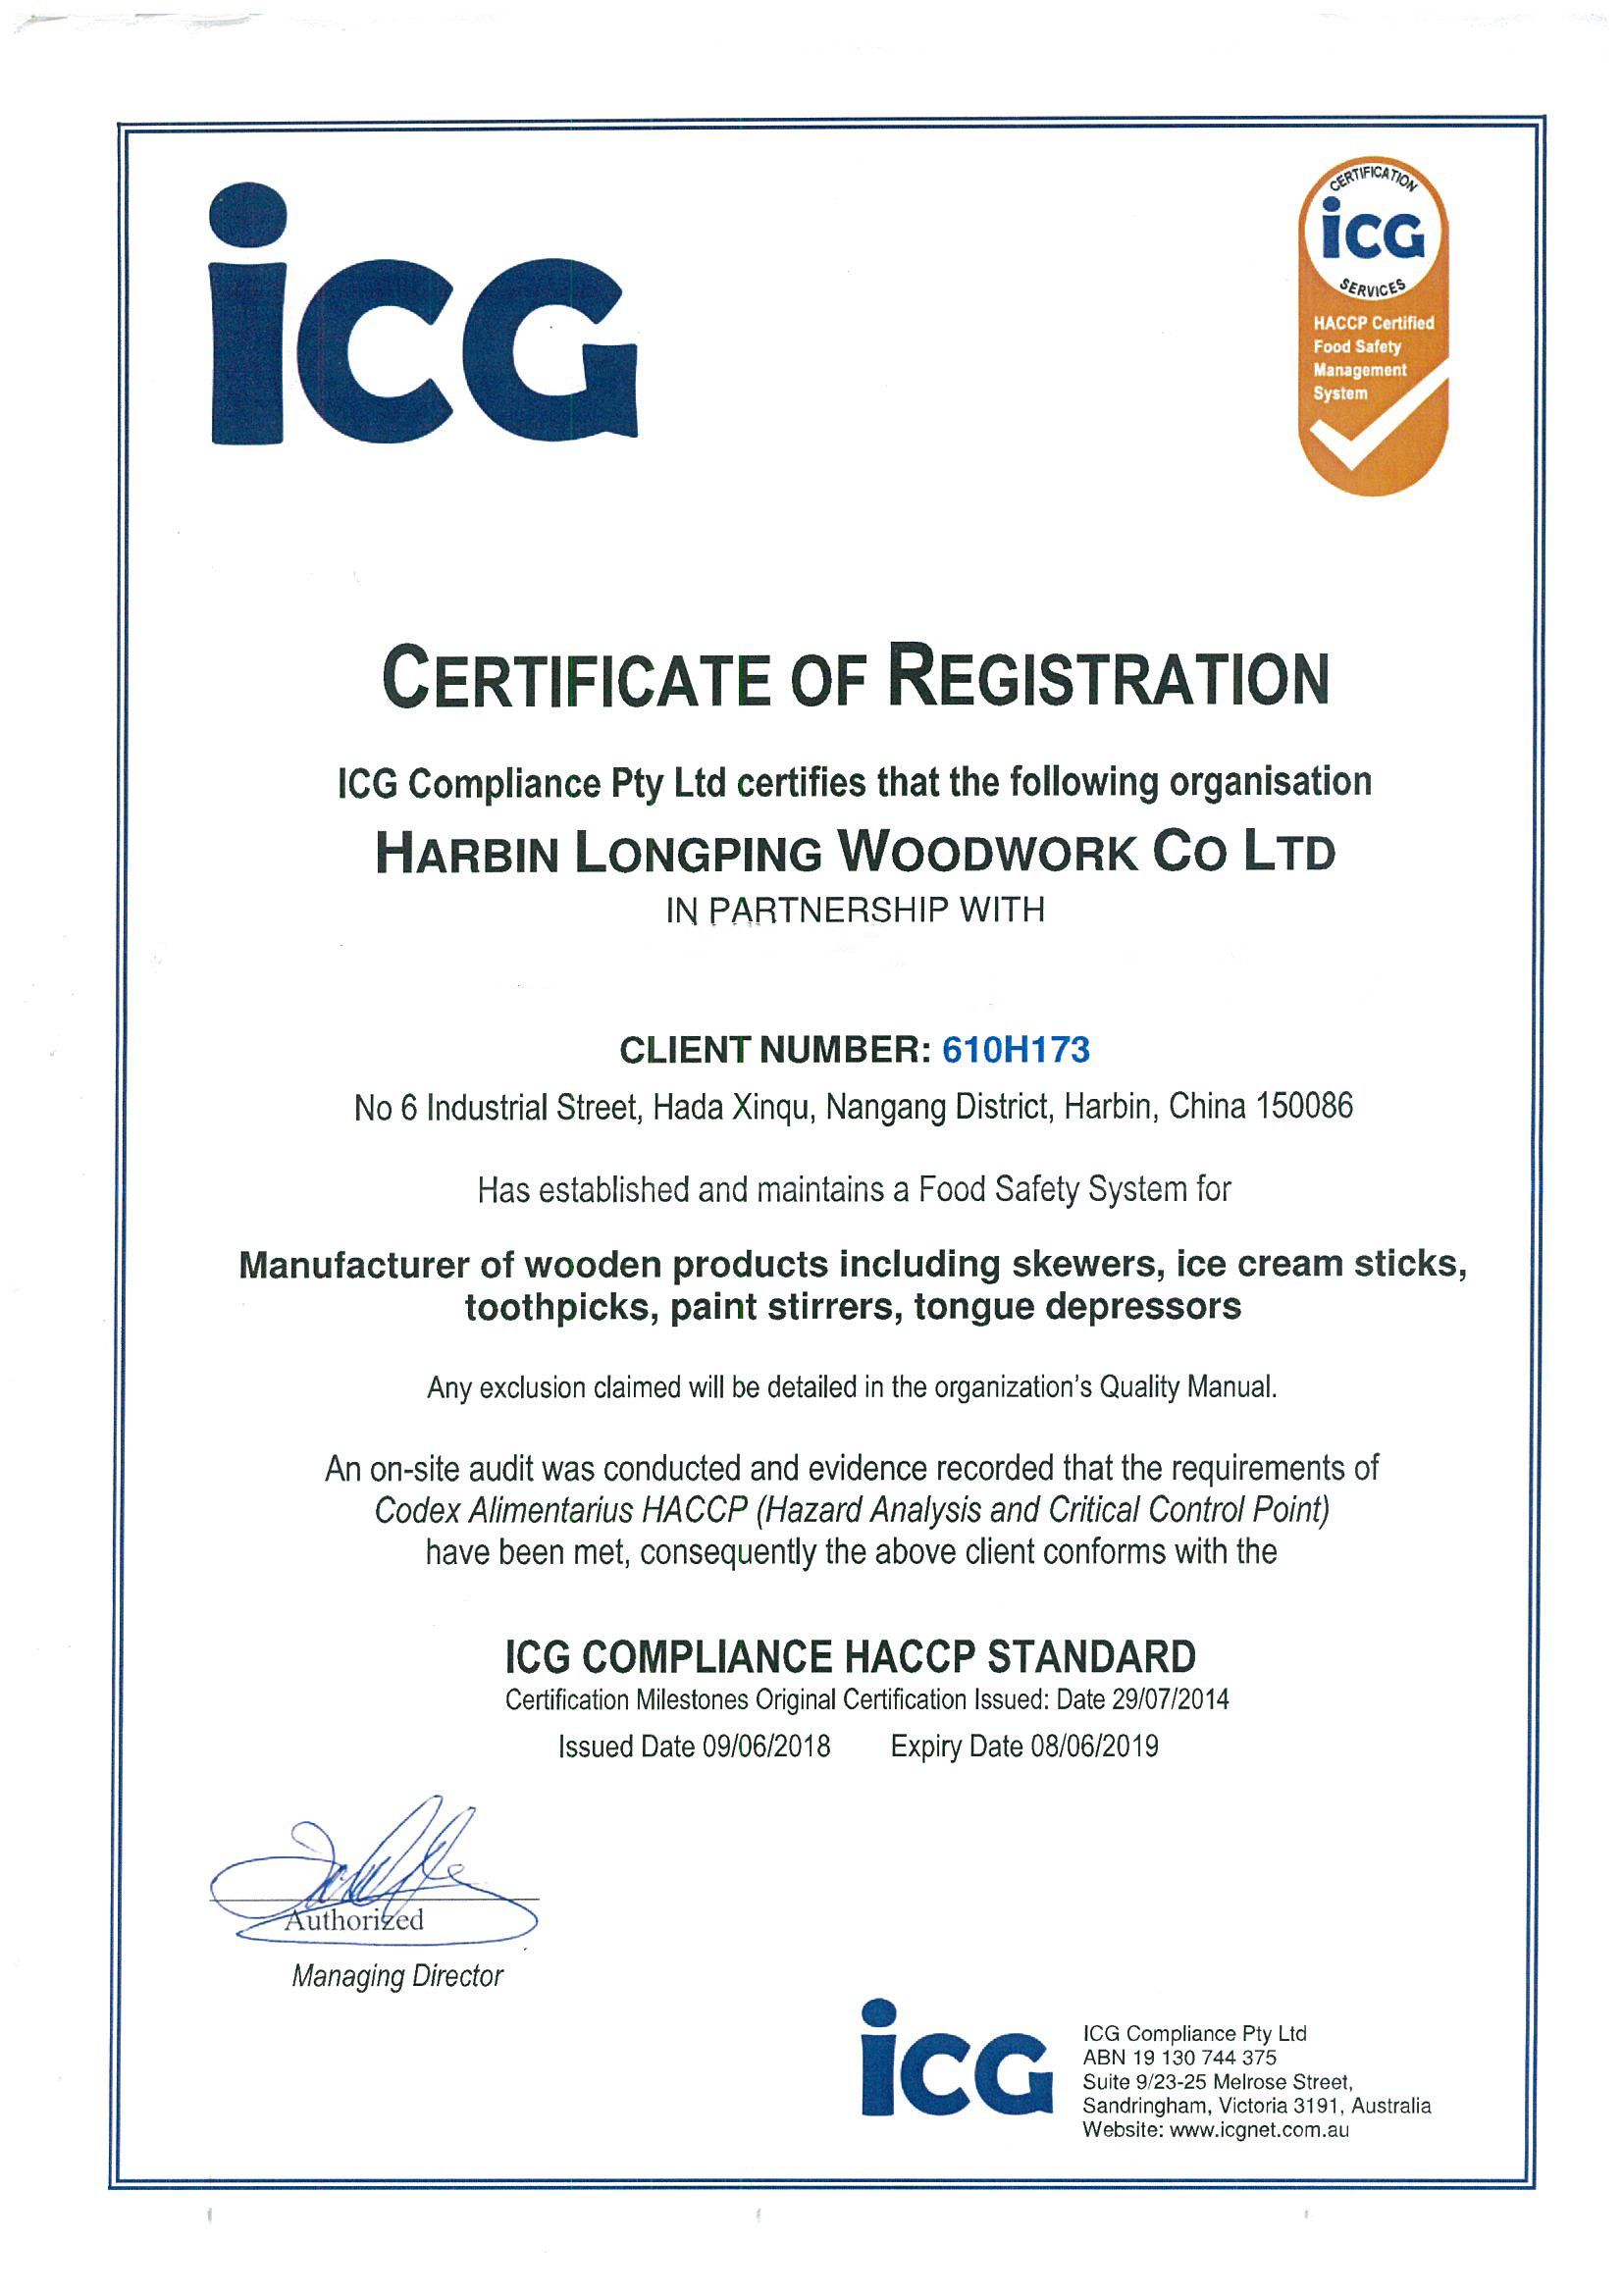 HACCP Certificates